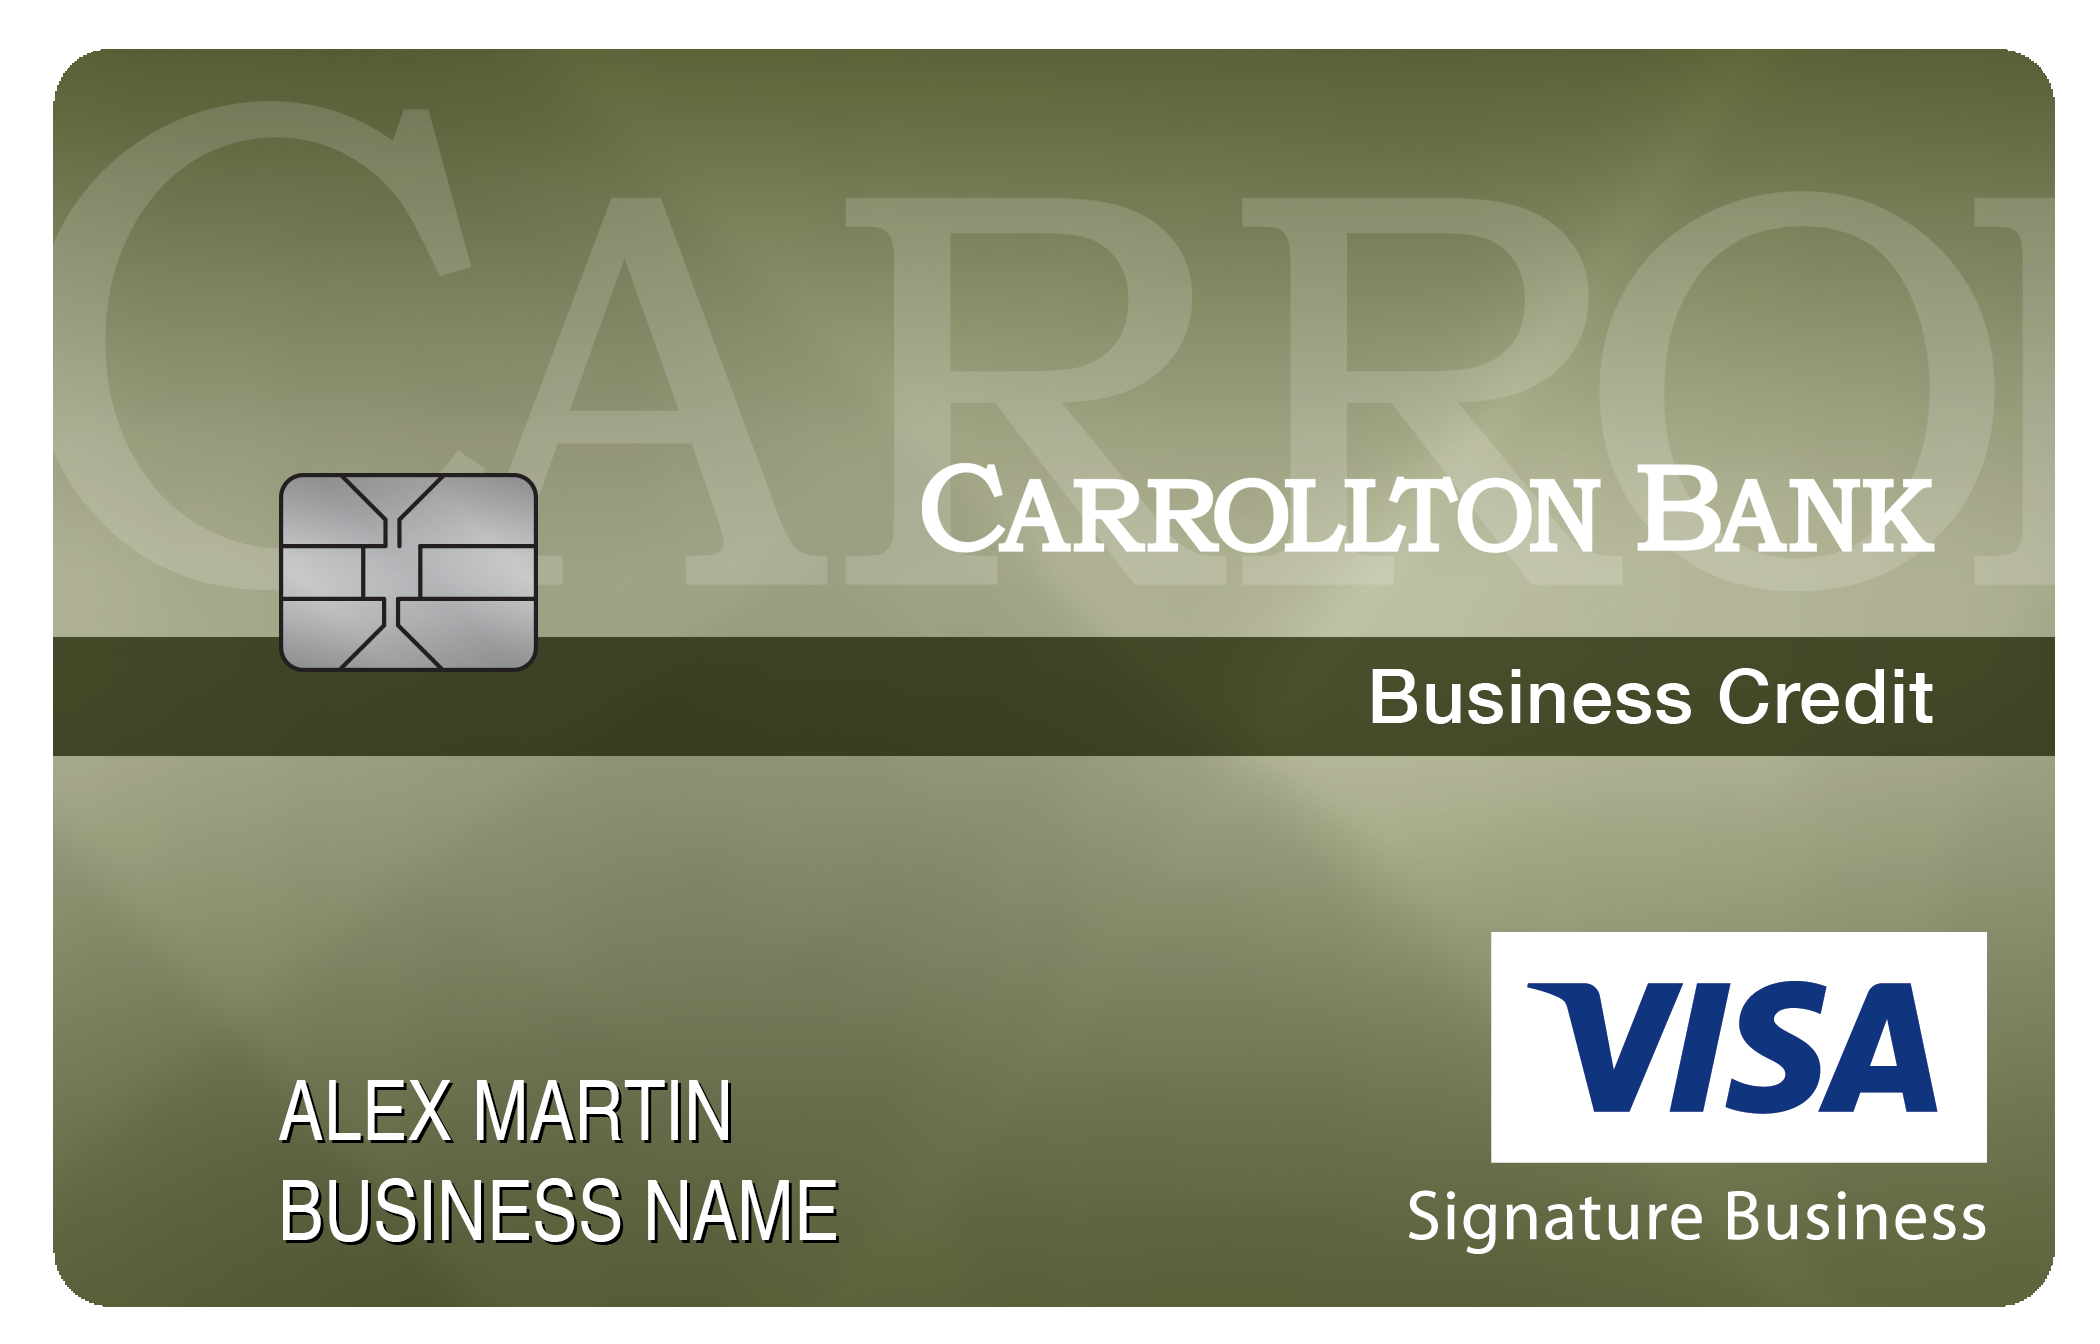 Carrollton Bank Smart Business Rewards Card